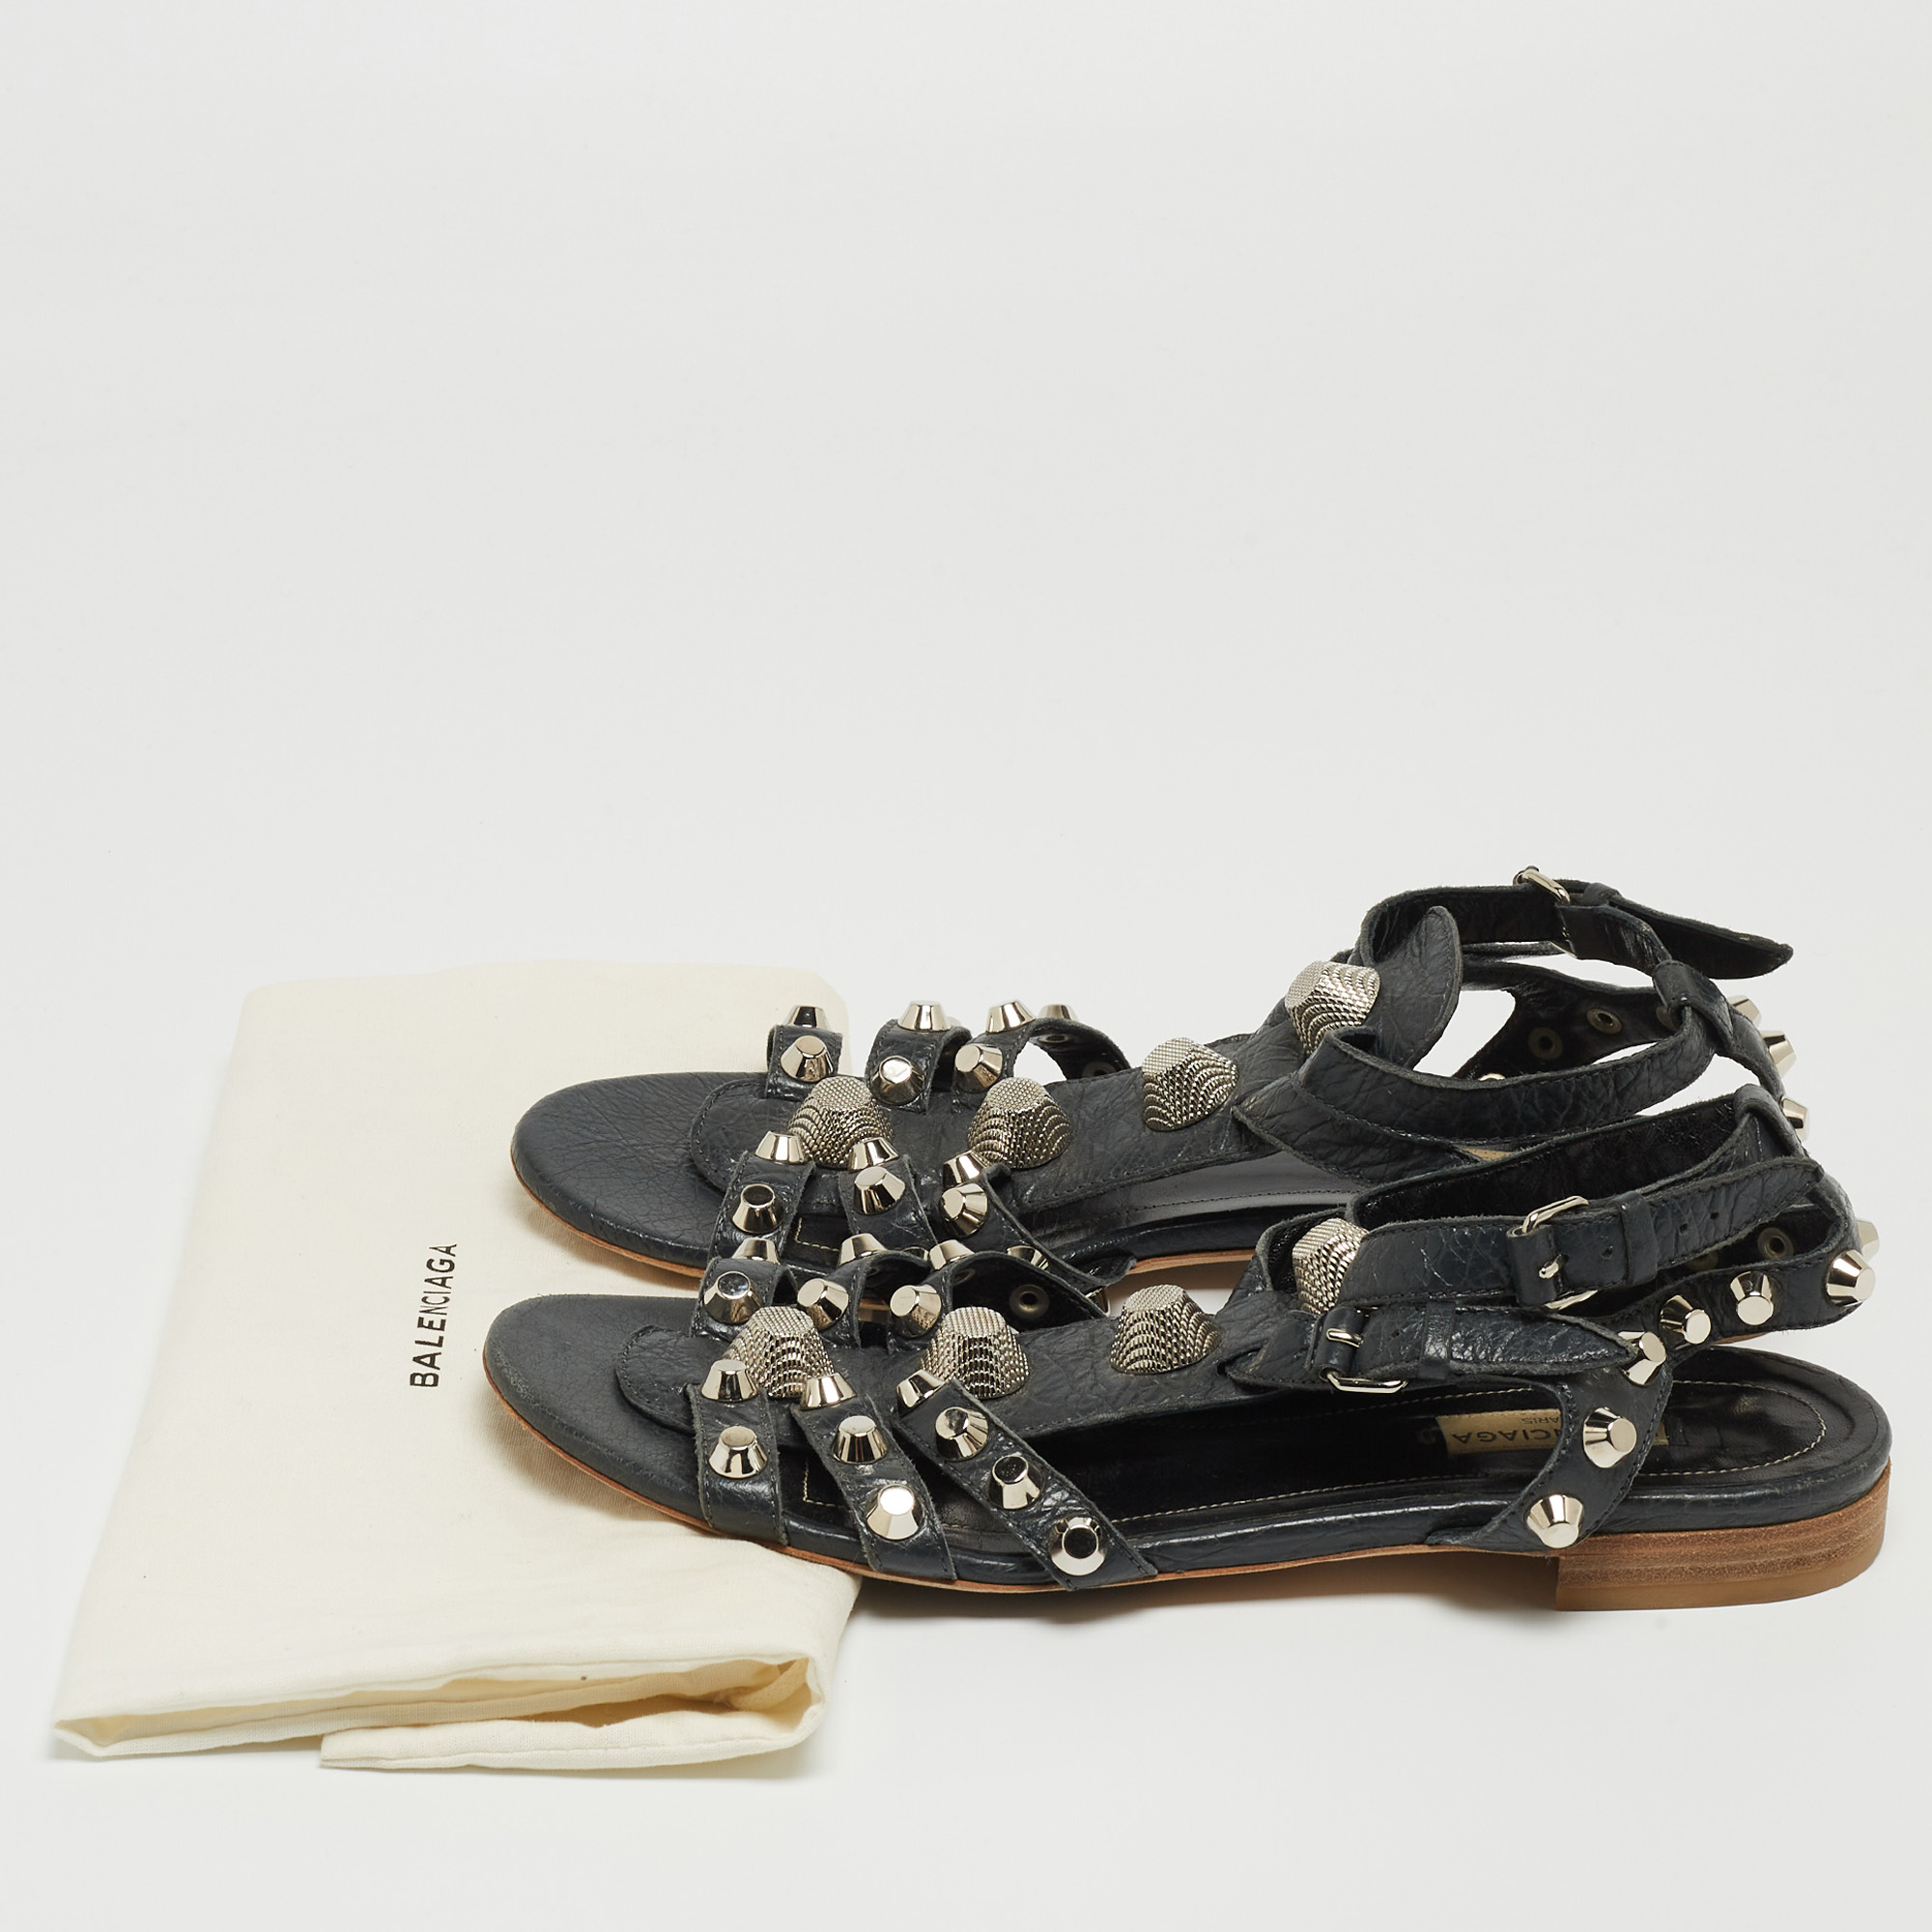 Balenciaga Dark Grey Leather Studded Ankle Strap Flat Sandals Size 39.5